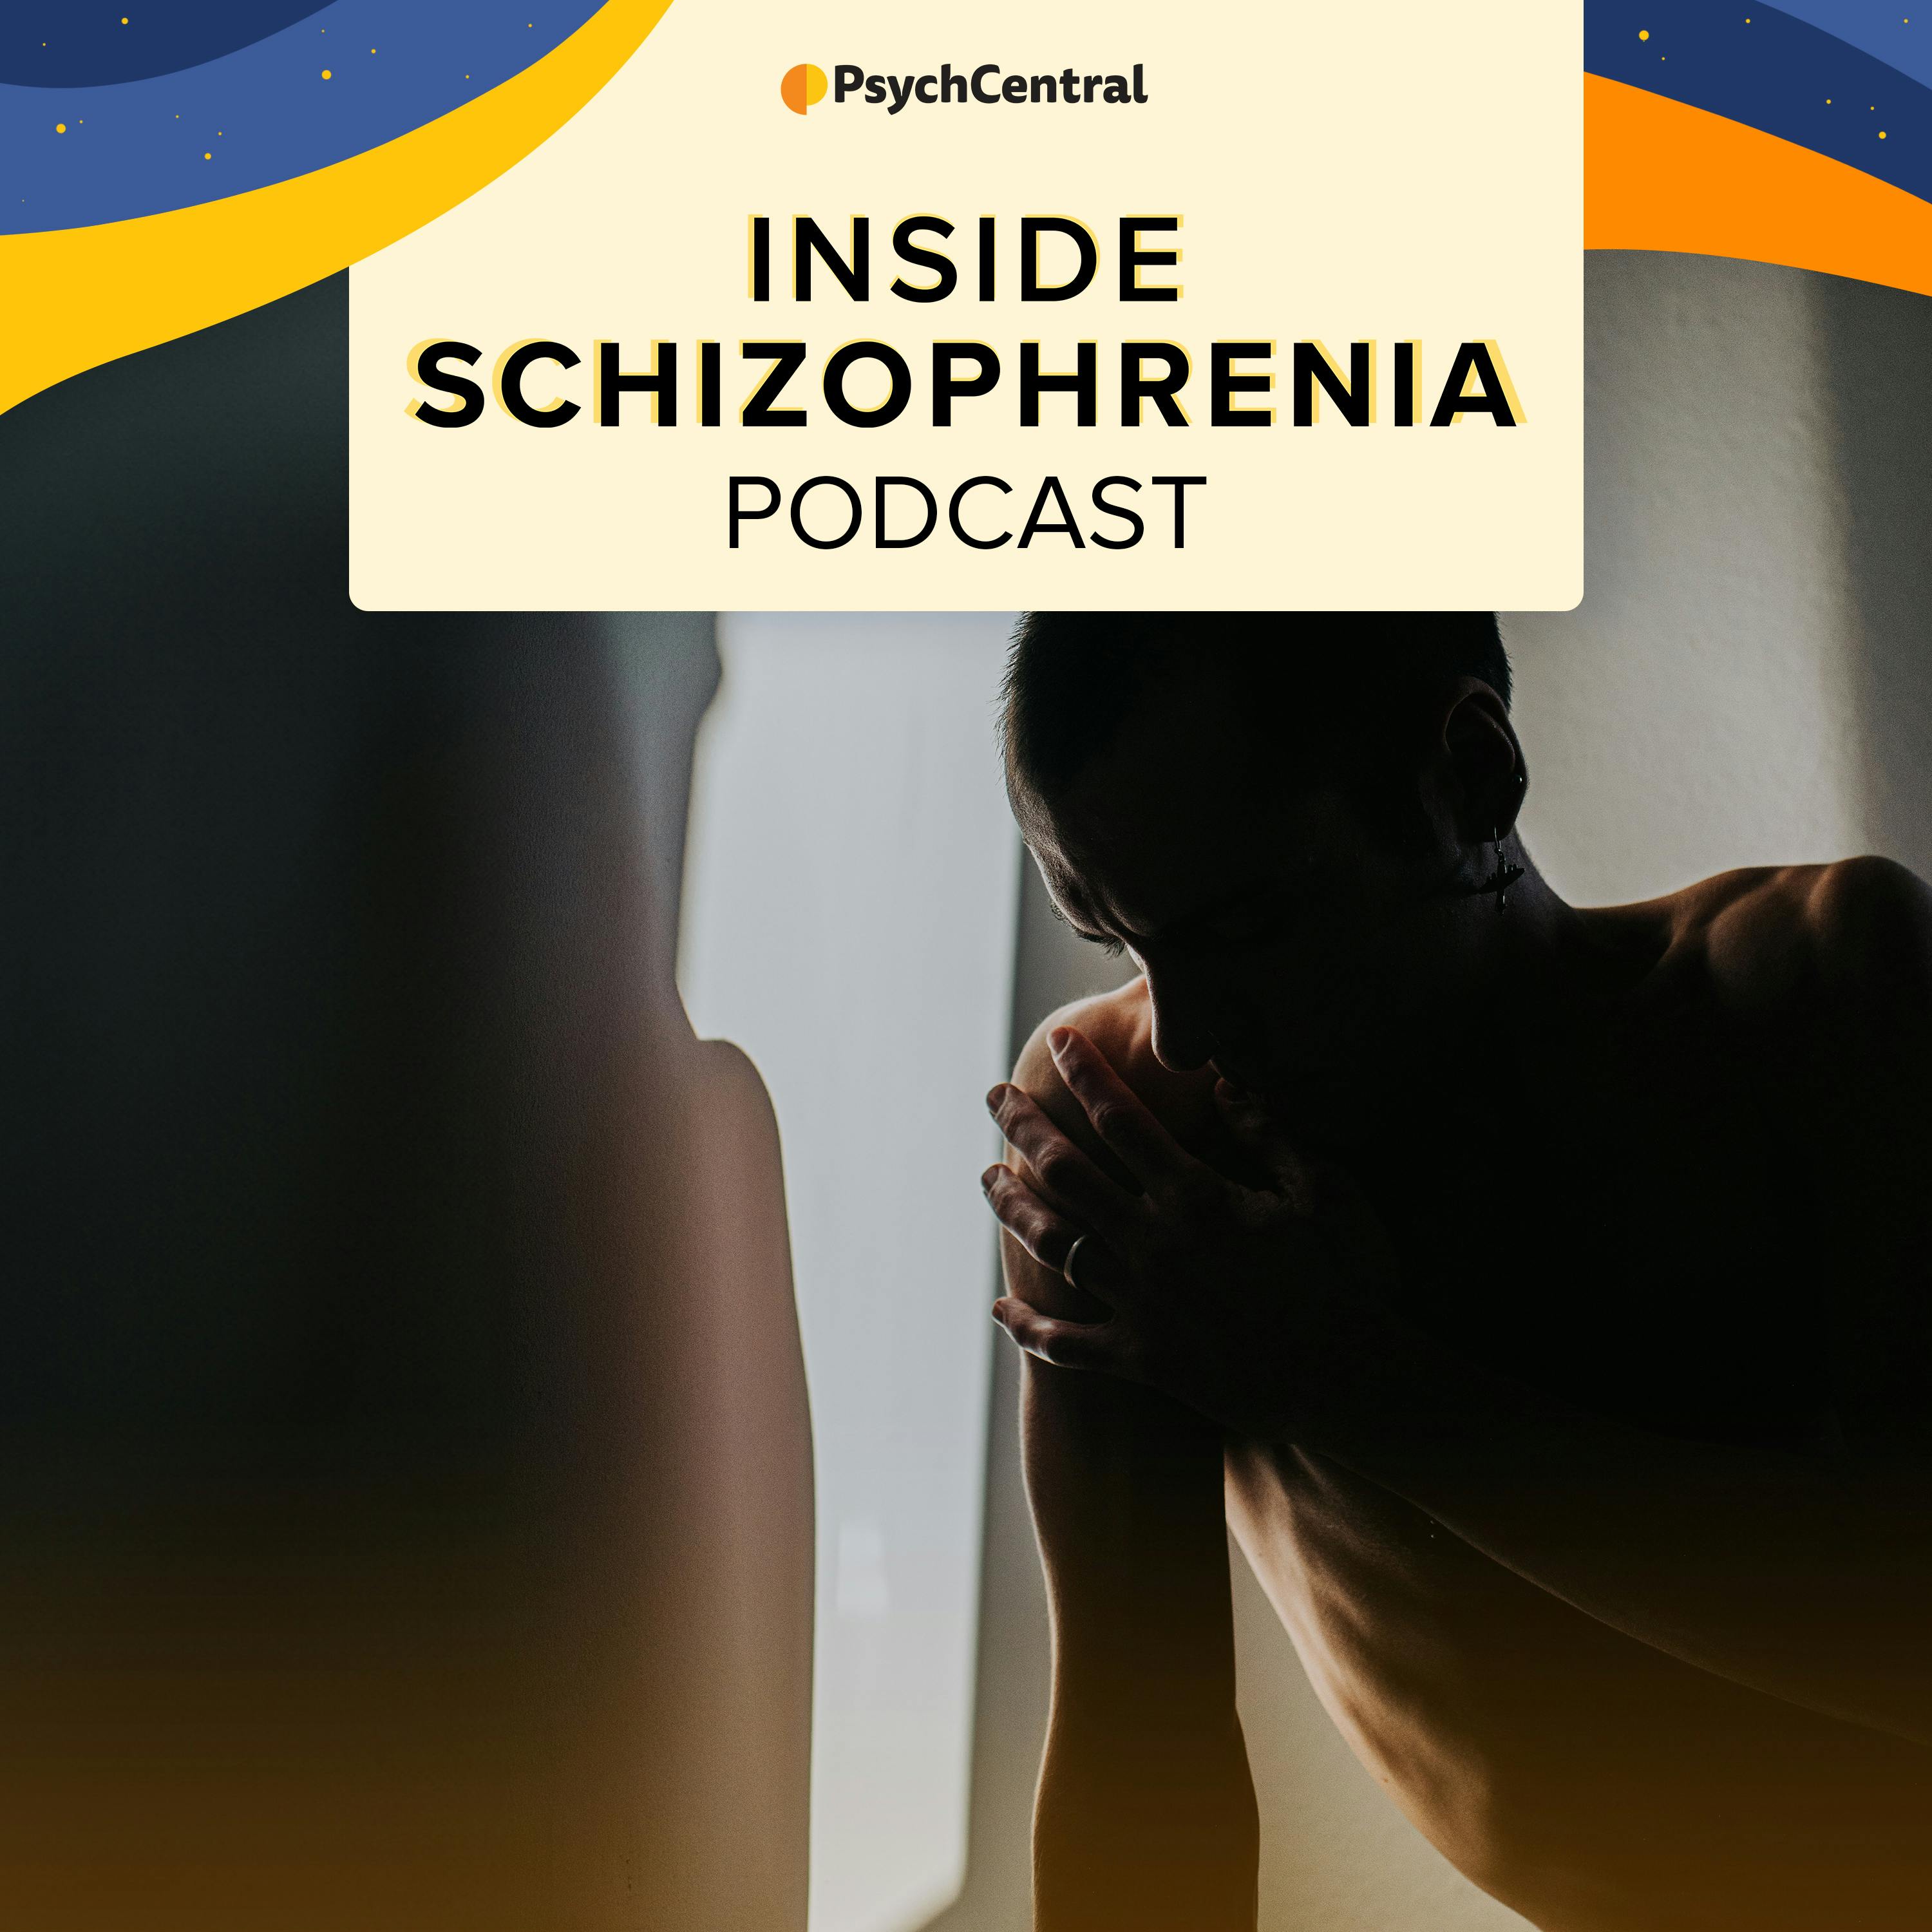 Early Indicators of Schizophrenia